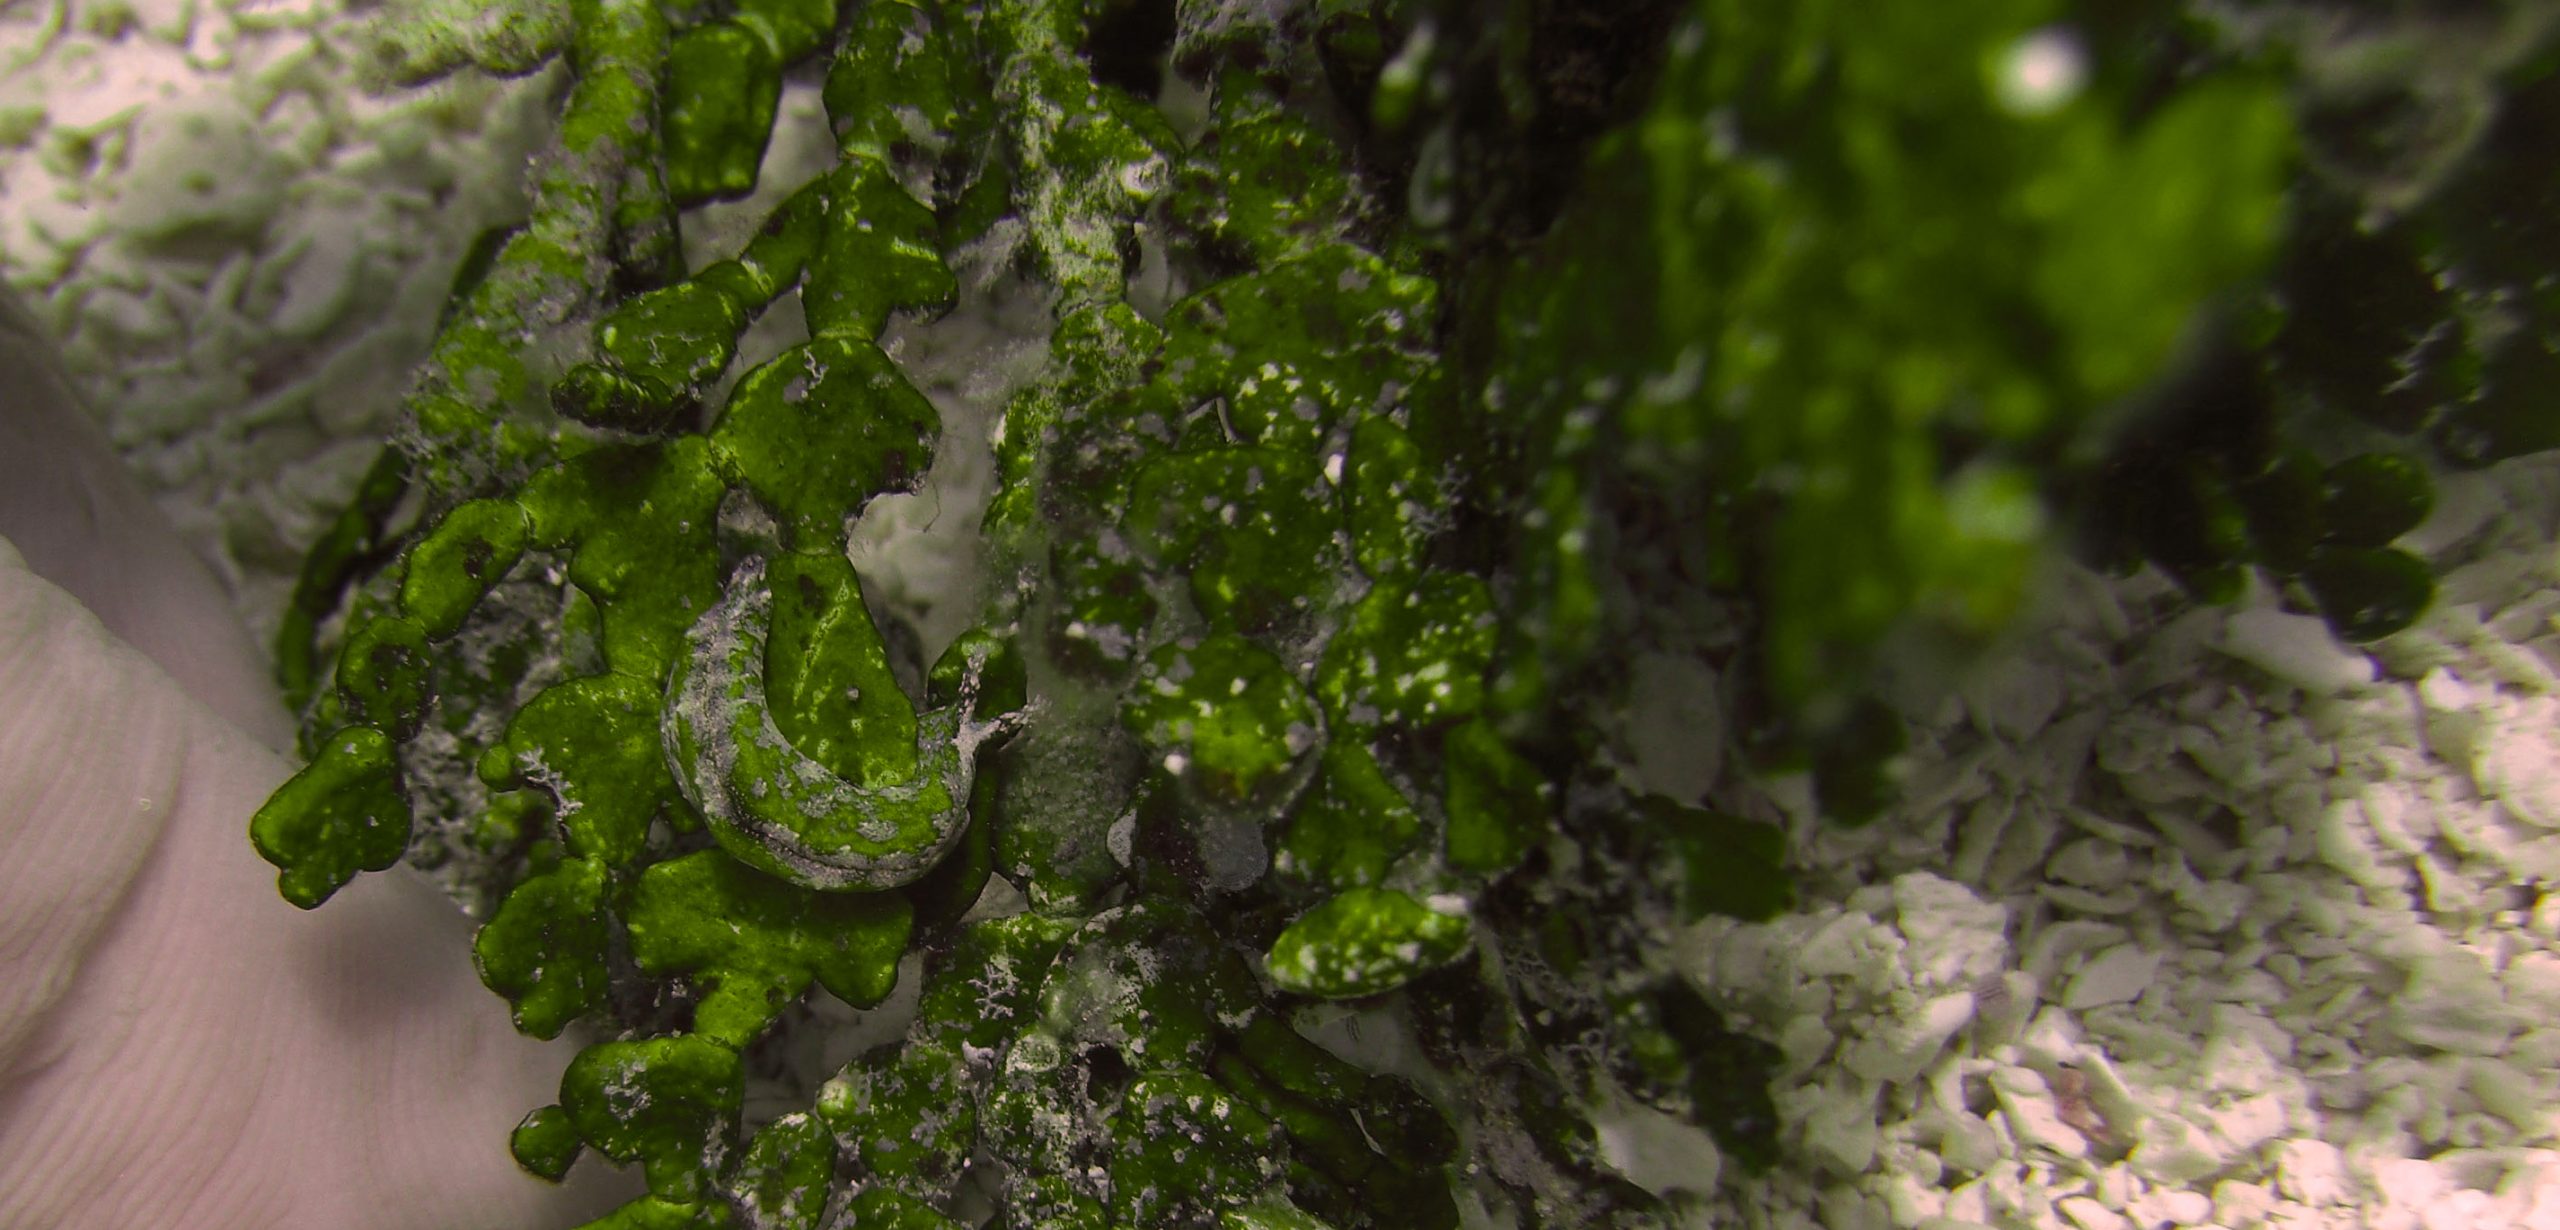 The seaweed Halimeda incrassata provides the sea slug Elysia tuca with perfect camo cover. Photo by Douglas B. Rasher